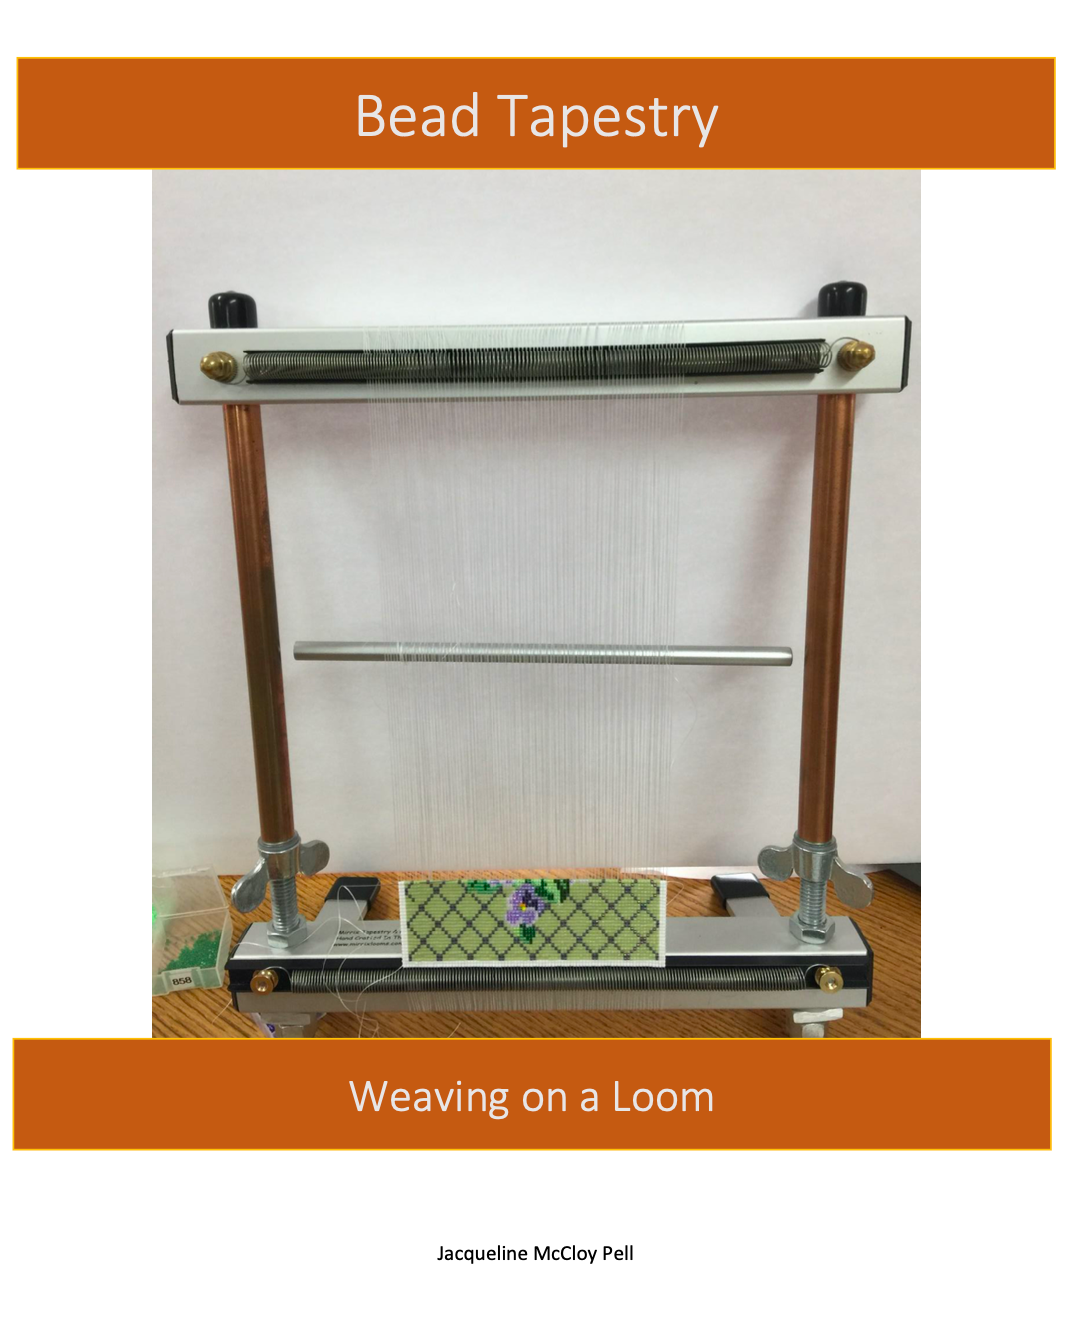 bead tapestry: weaving on a loom